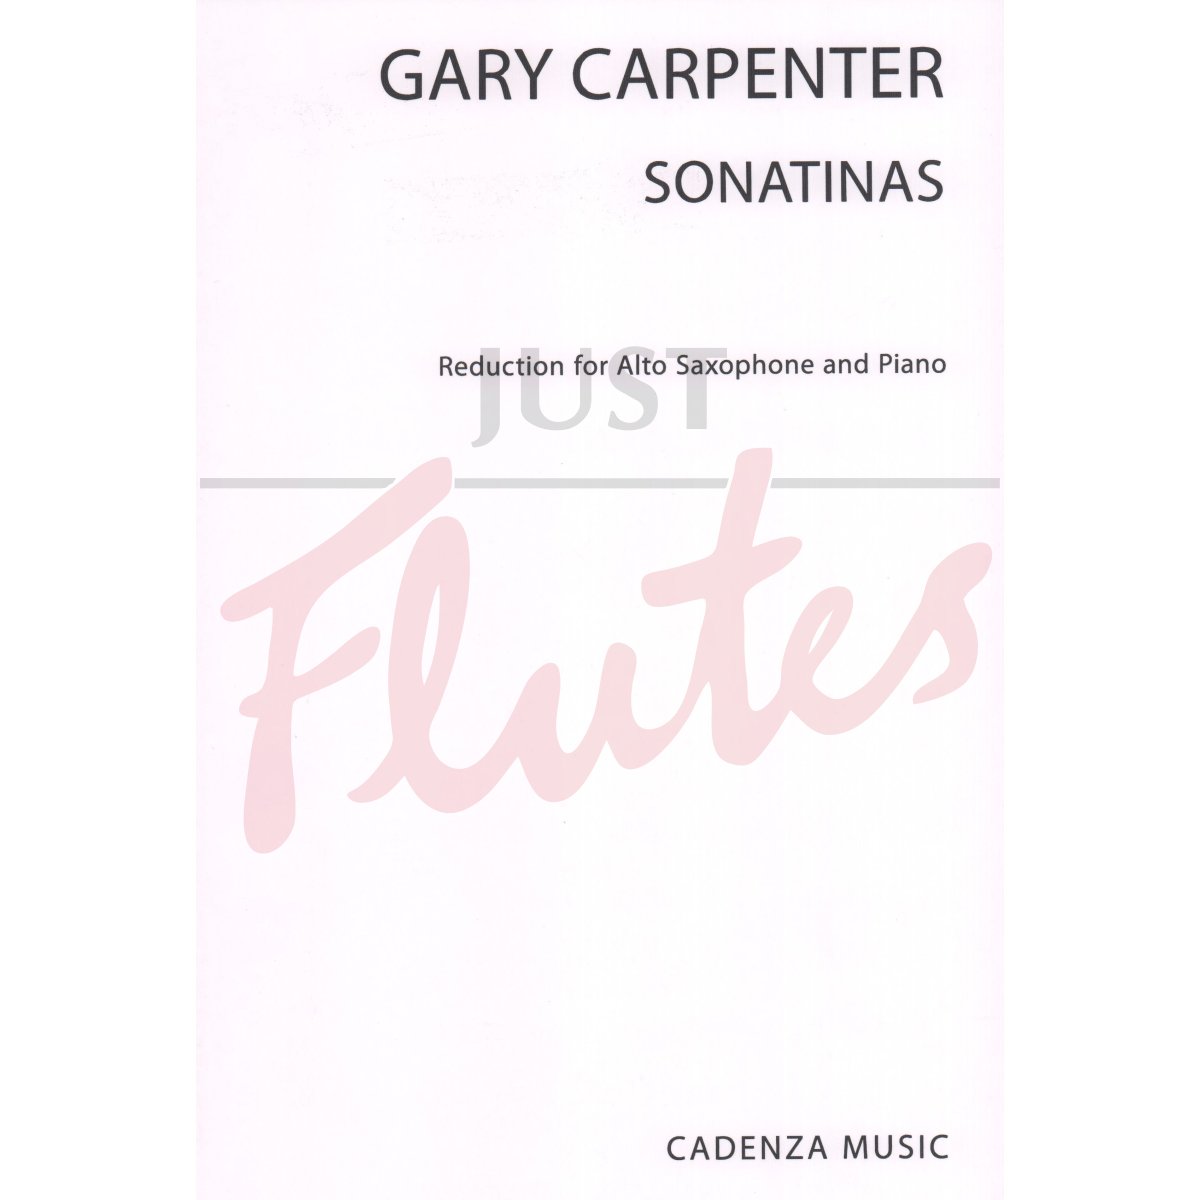 Sonatinas for Alto Saxophone and Piano